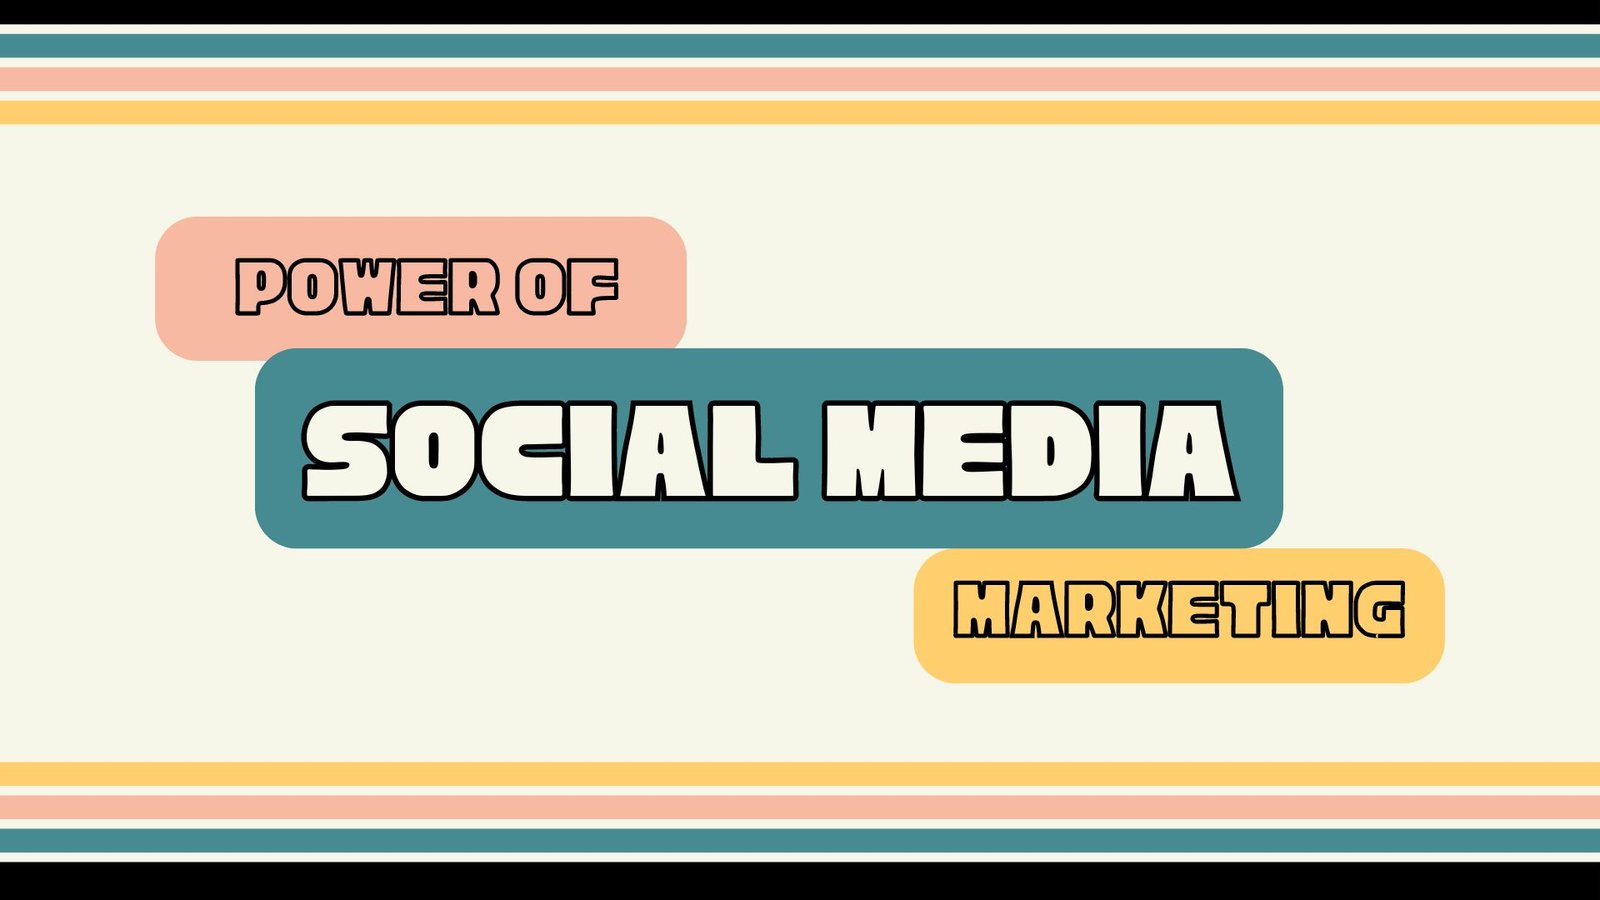 Best Social Media Marketing Agency in India